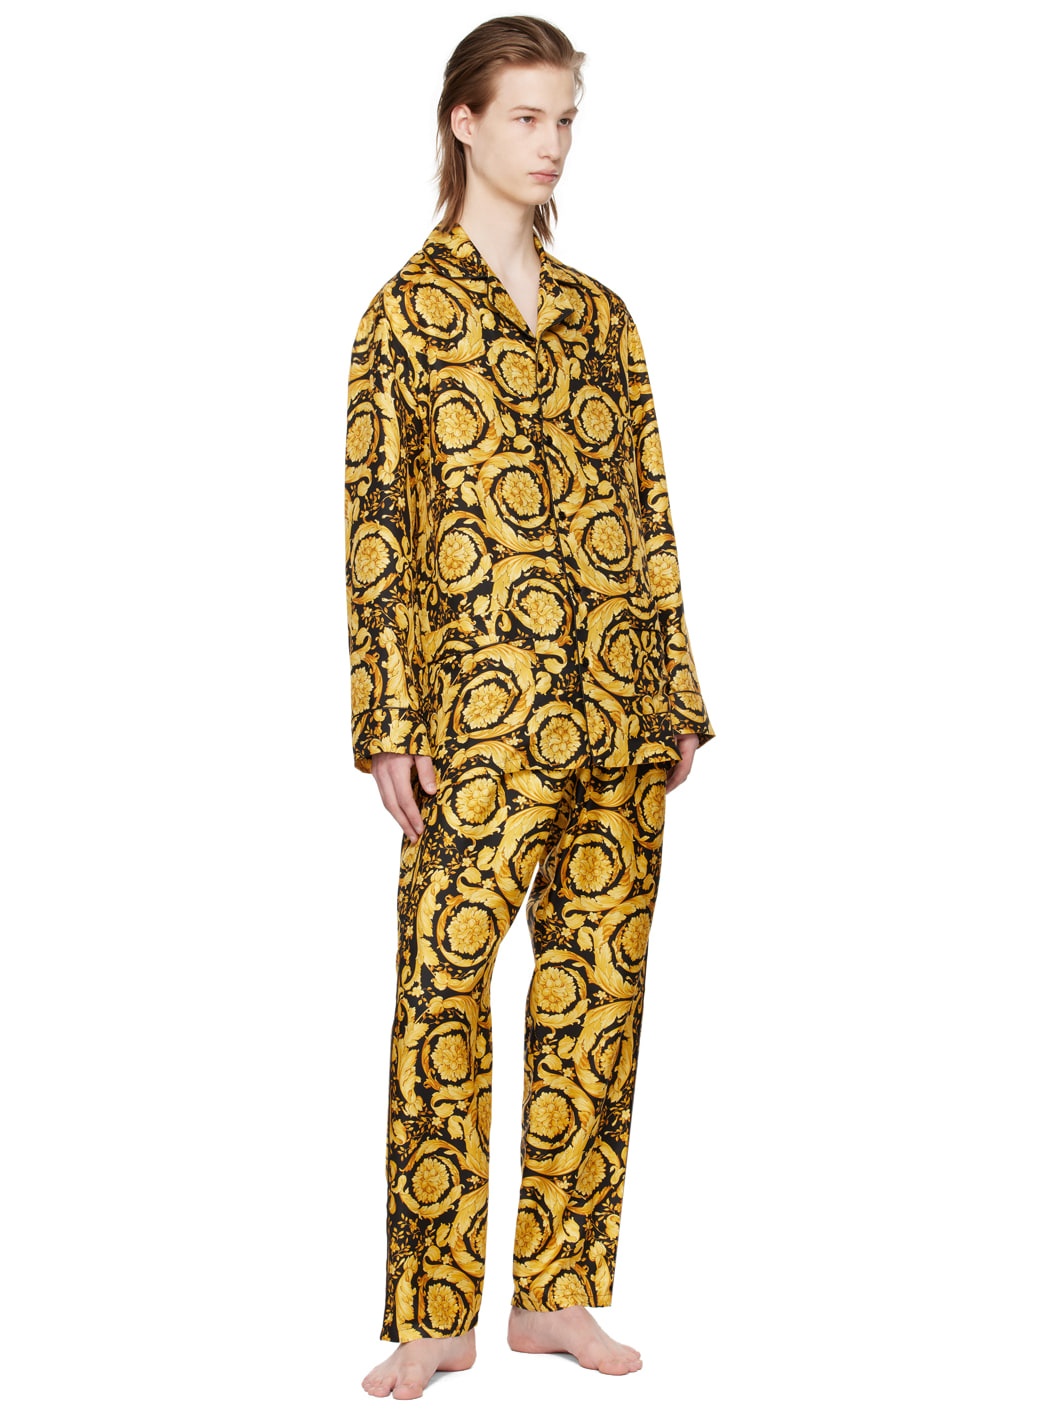 Black & Yellow Barocco Pyjama Shirt - 4